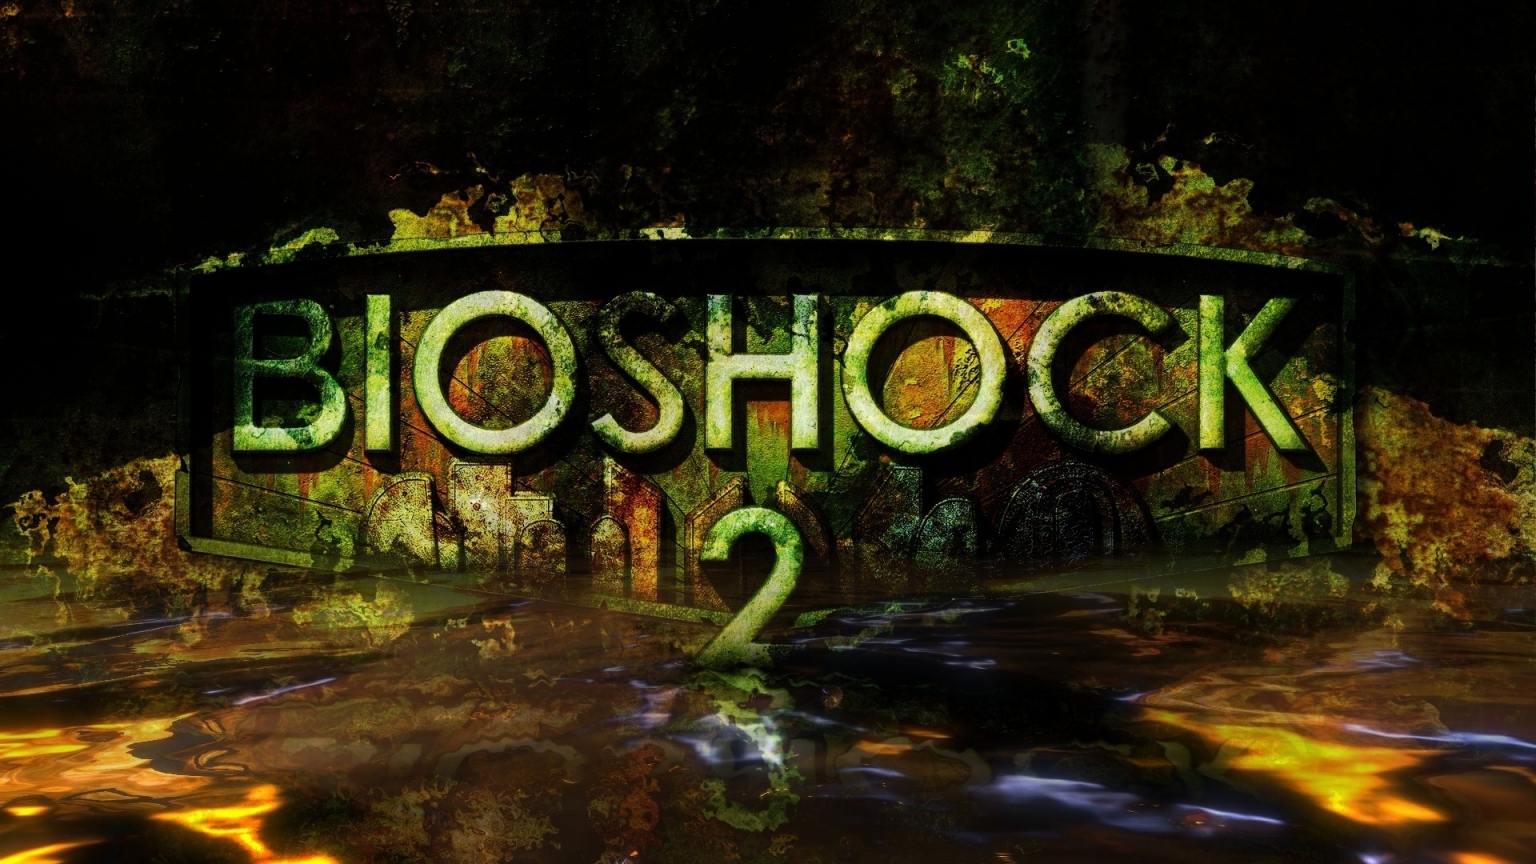 Bioshock 2 Video Game for 1536 x 864 HDTV resolution